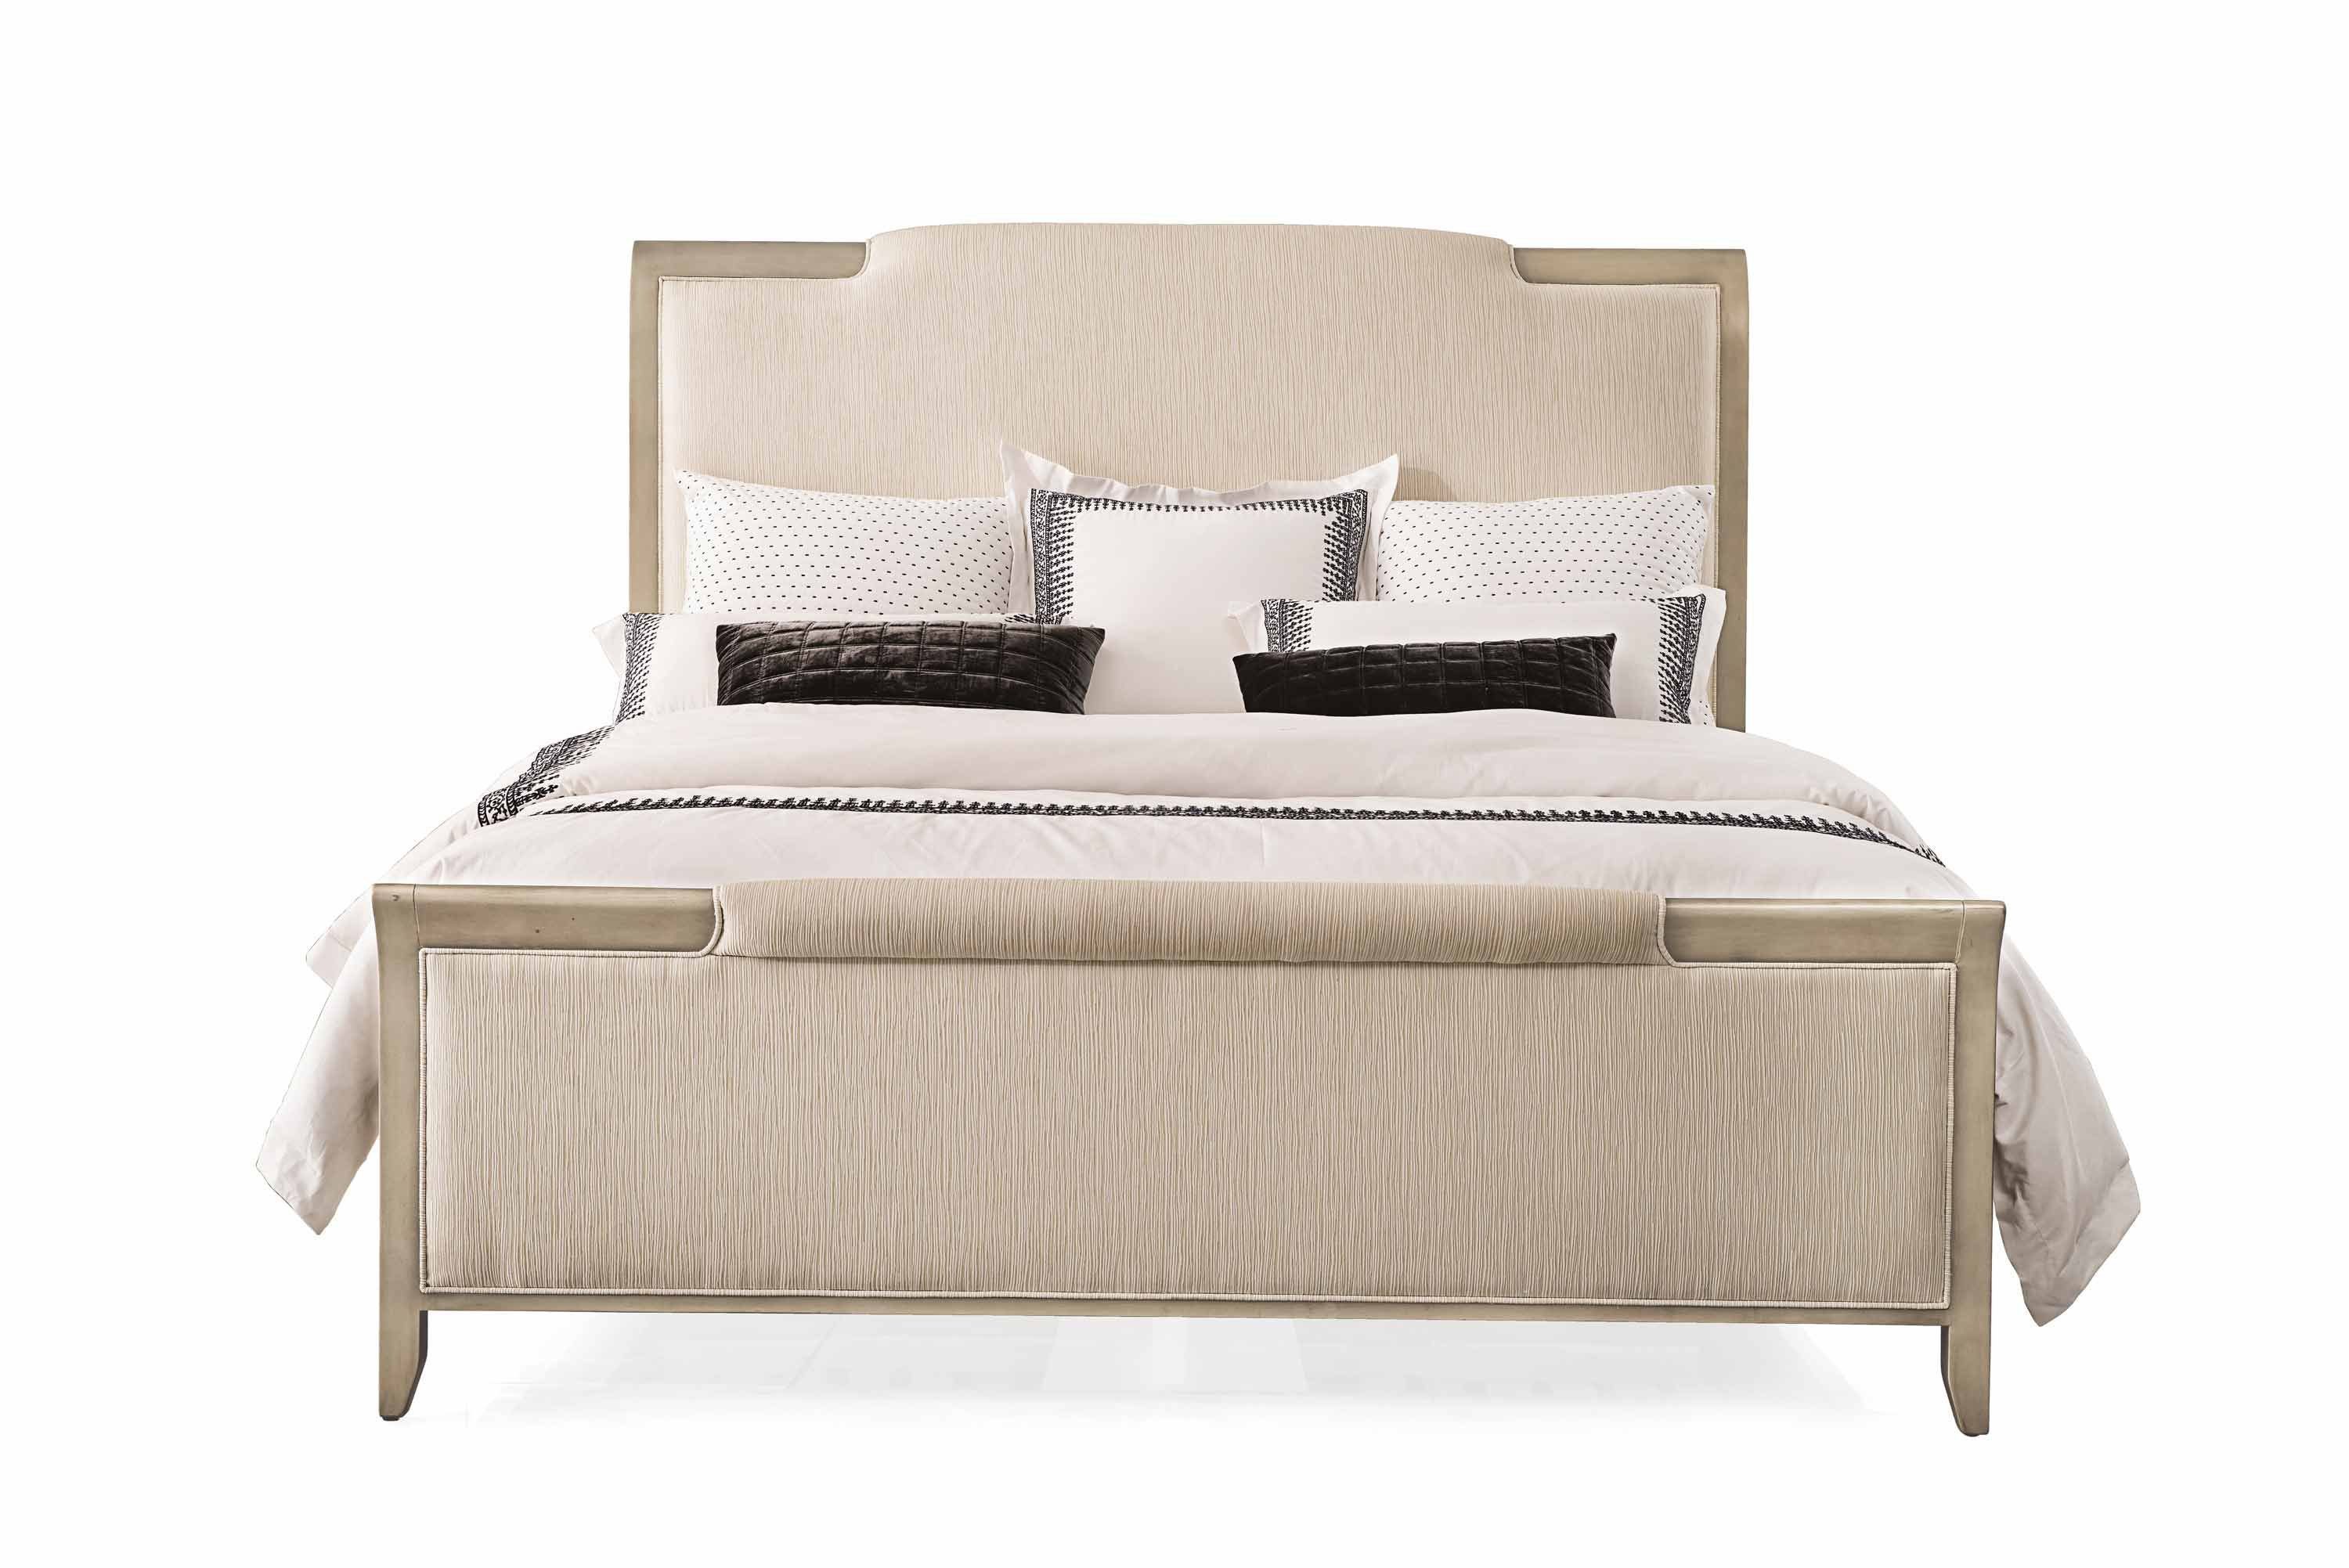 JVmoebel Bett Polster Design 223 Betten Bett 192cm Modernes x Leder Luxus Stoff